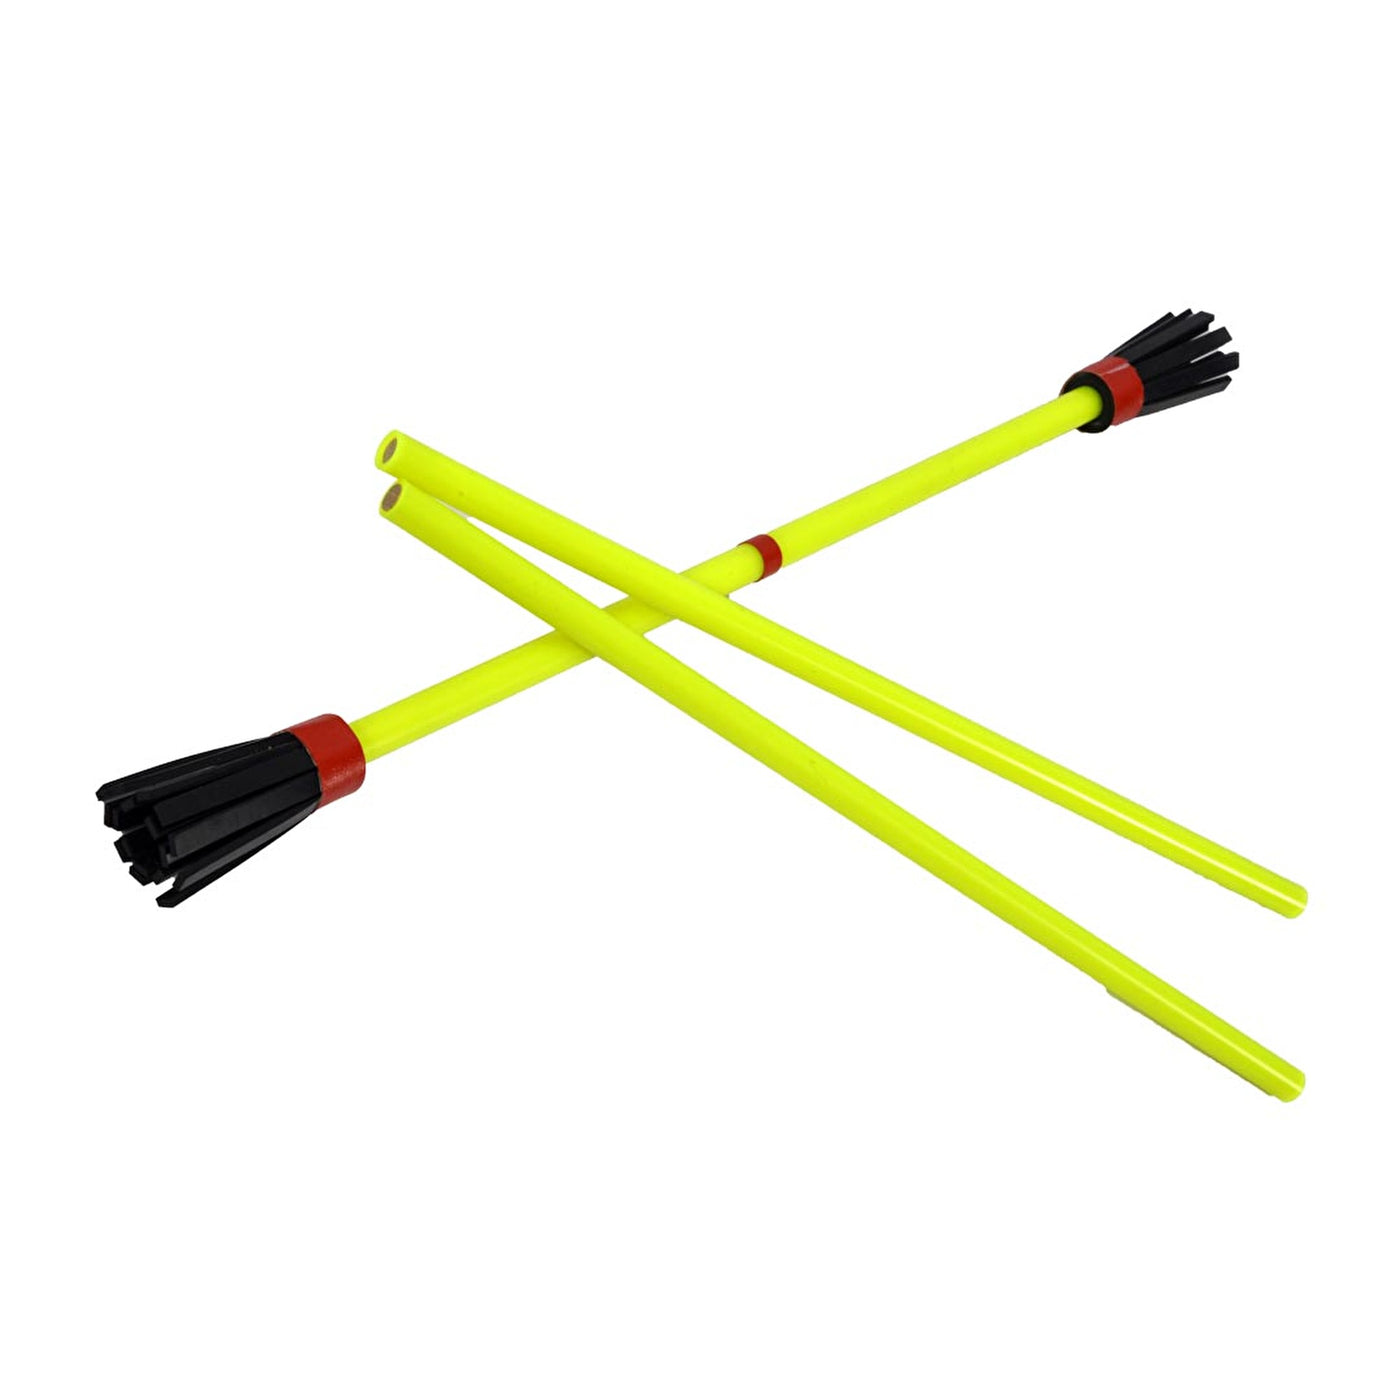 Silicone flower stick kit for children 57cm